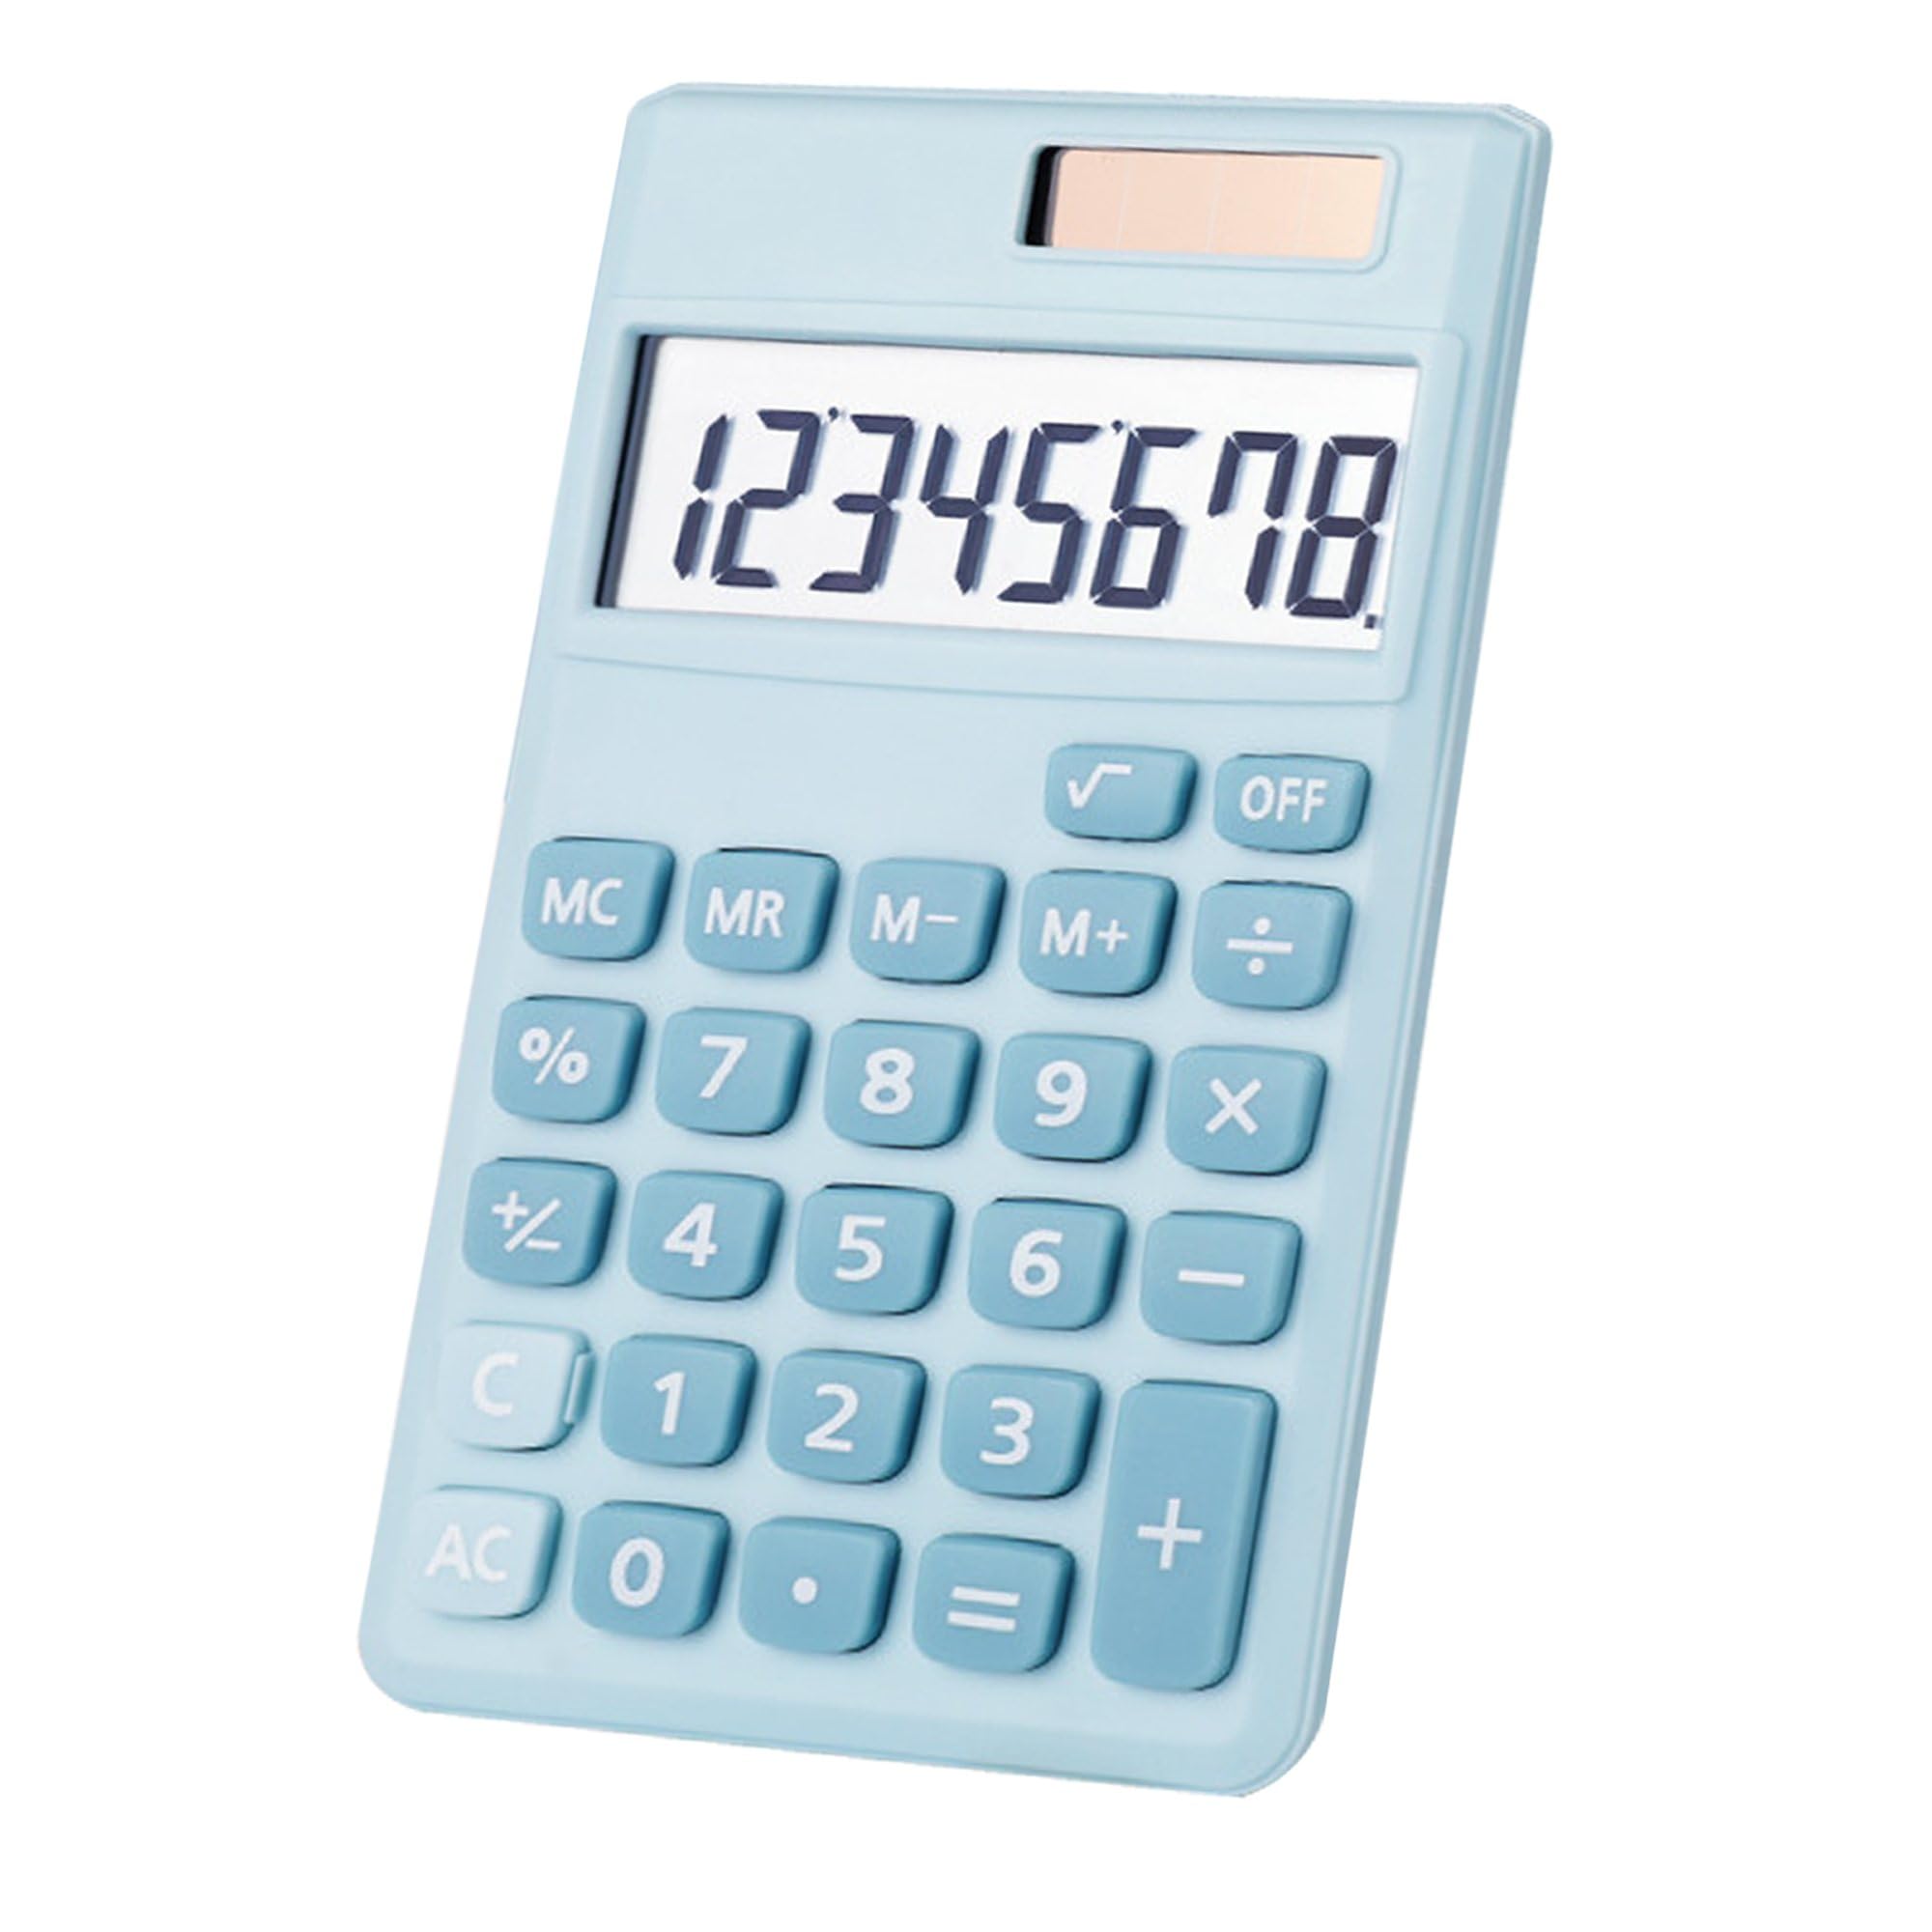 Basic Calculator, Desktop Cute Pocket Size Mini Calculators for School, Office, Home (Light Blue)